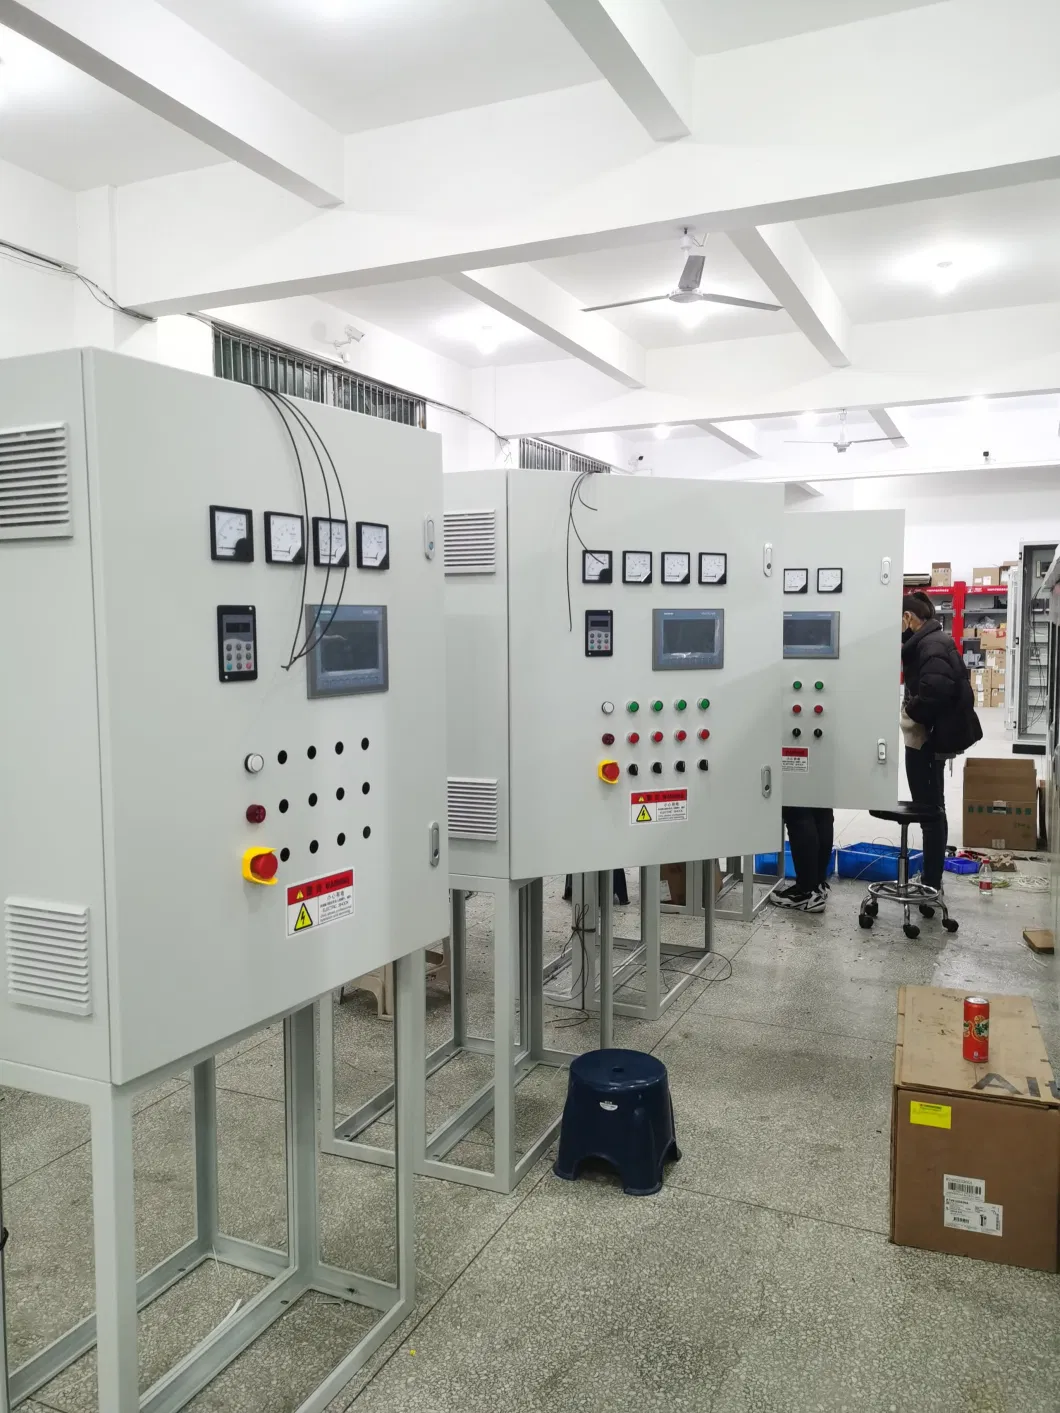 As8 Customized Distribution Box OEM Mall Power Distribution Equipment